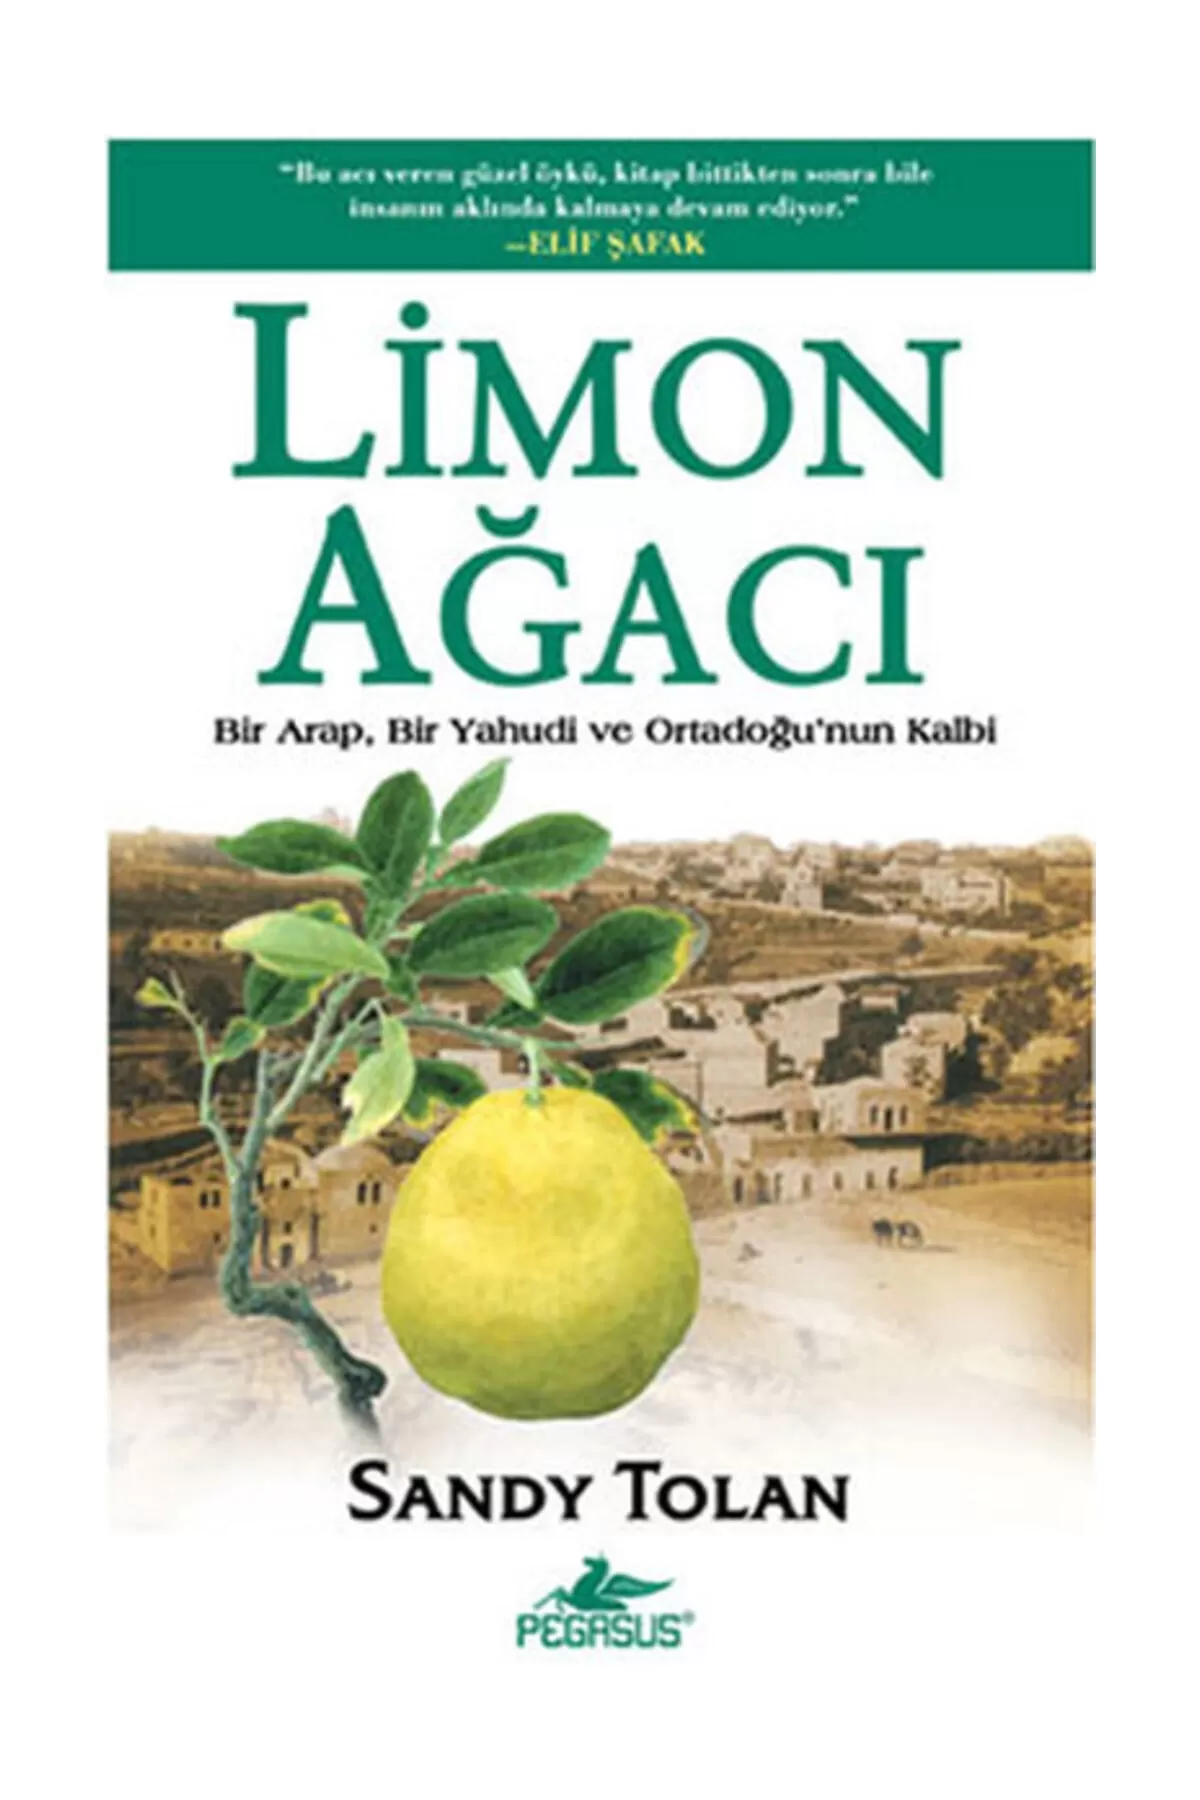 Sandy Tolan "Limon Ağacı" PDF